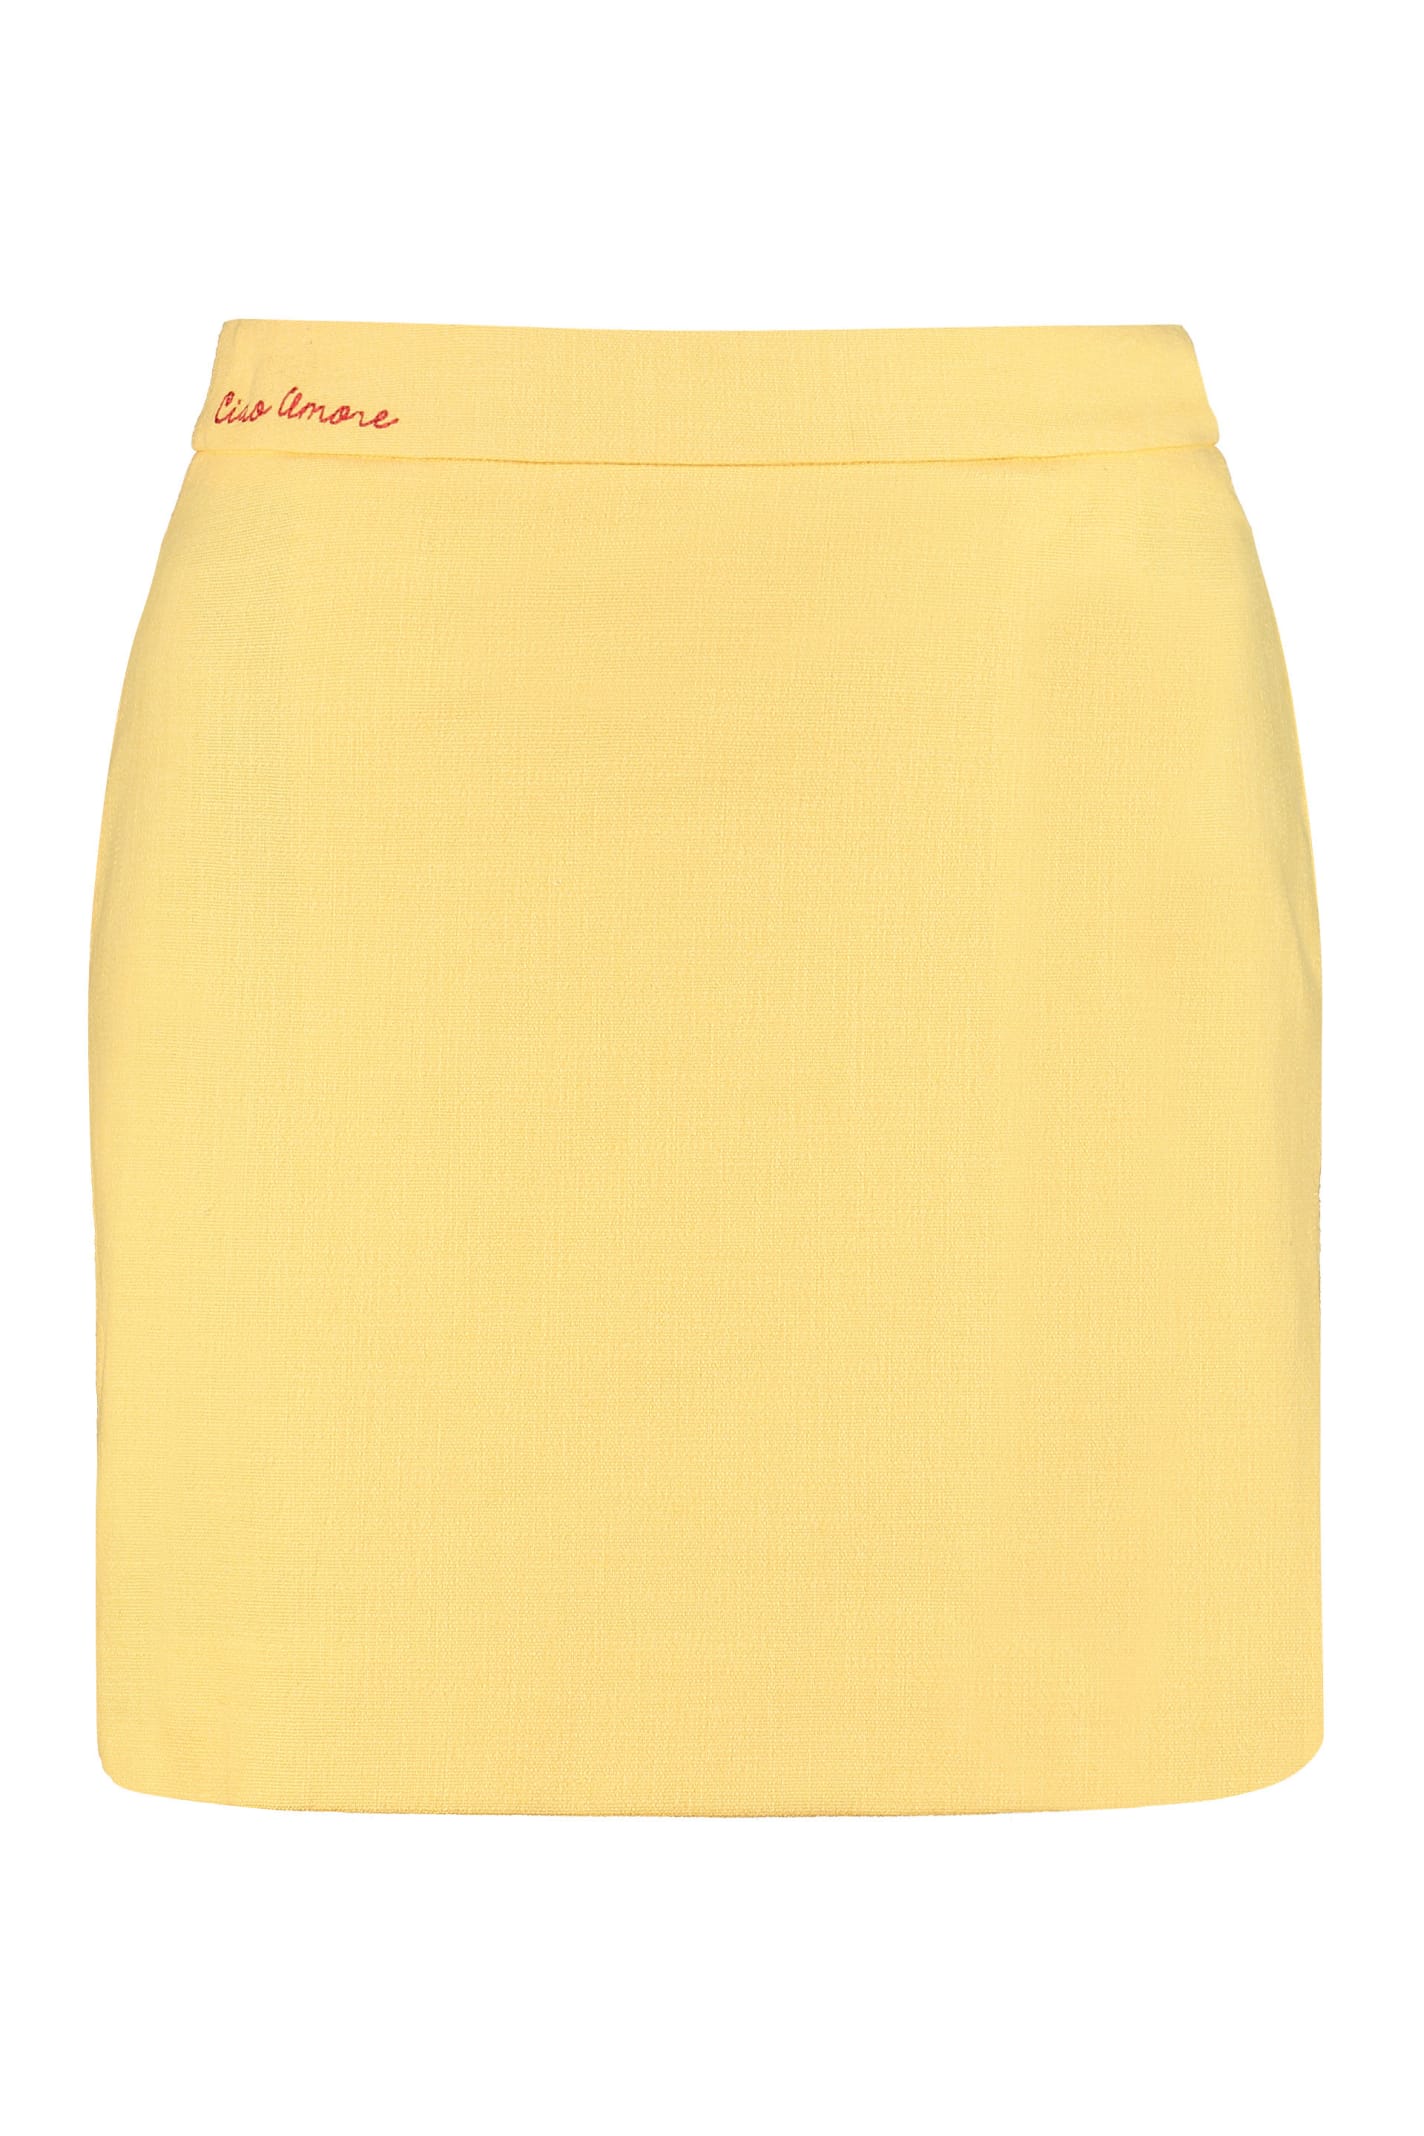 Giada Benincasa Embroidered Skirt